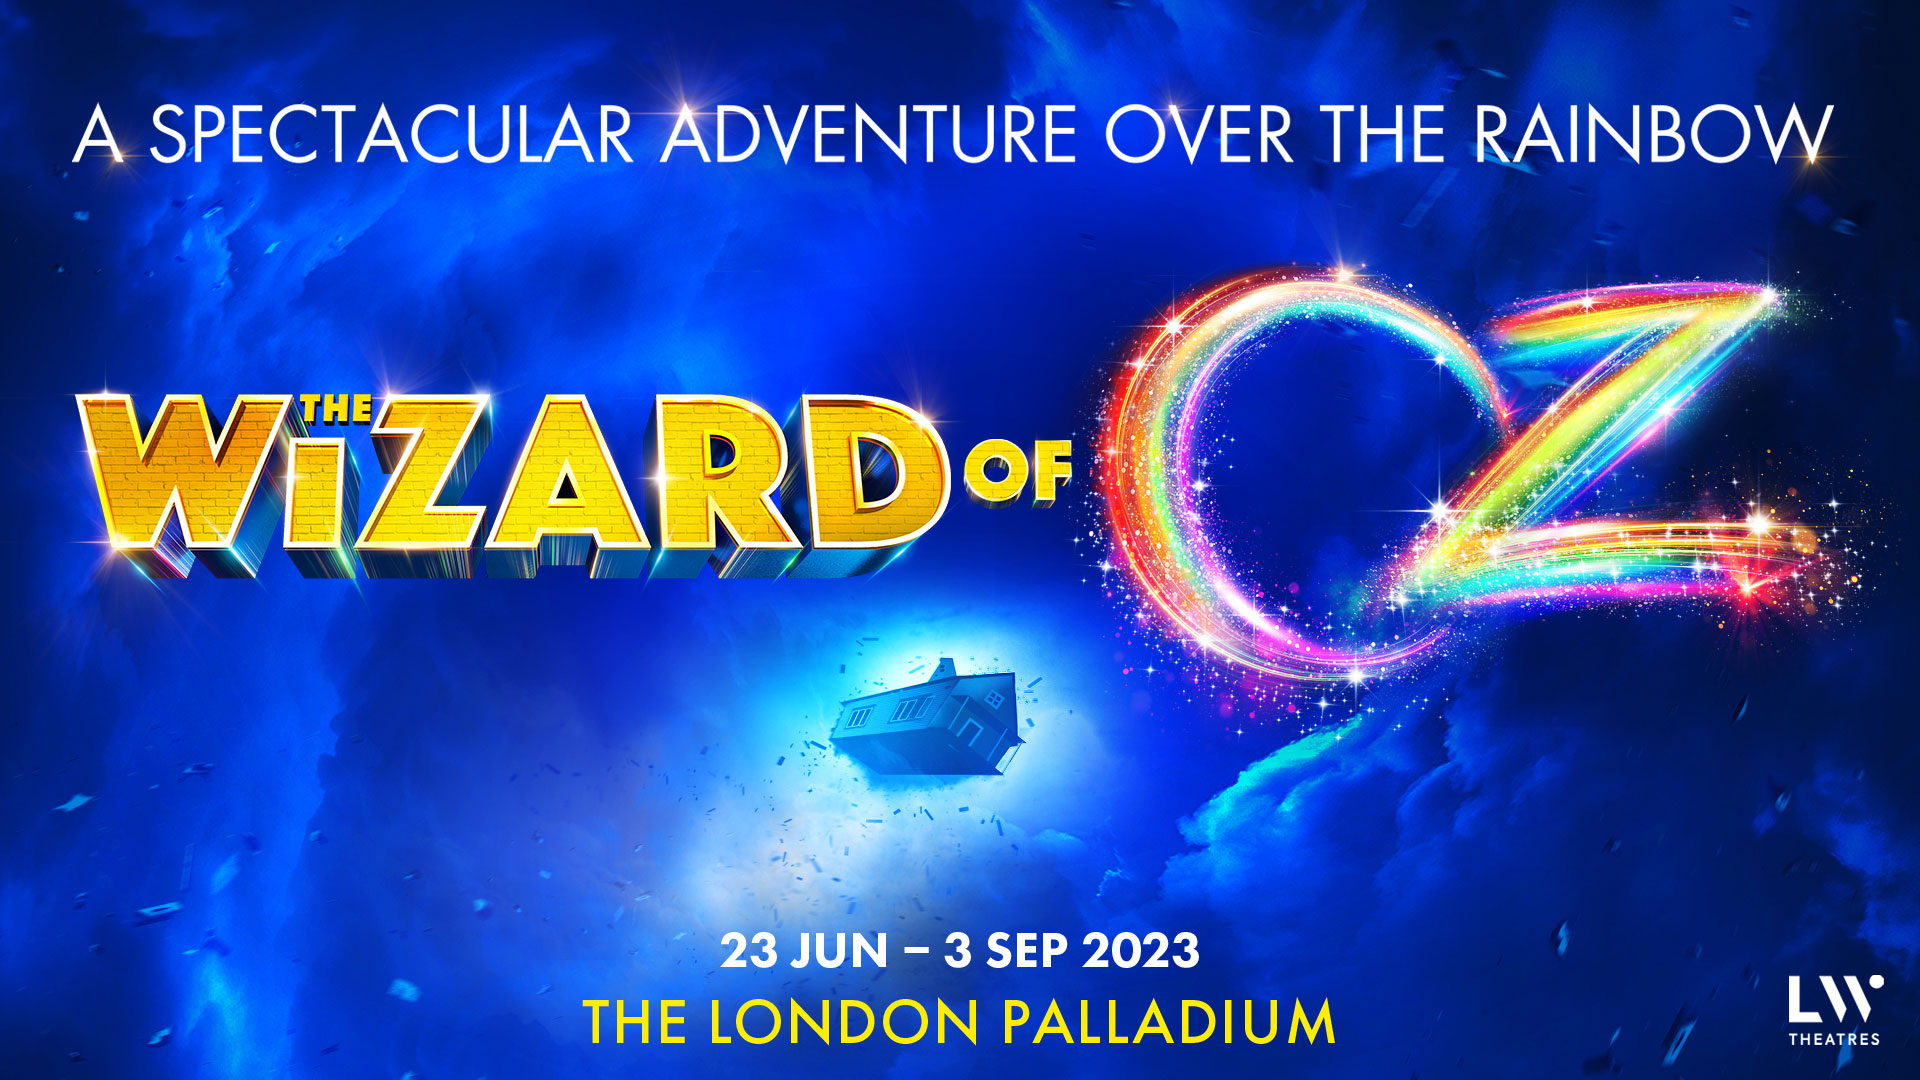 Wizard Of Oz. A spectacular adventure over the rainbow. 23 Jun - 3 Sep 2023 at The London Palladium.